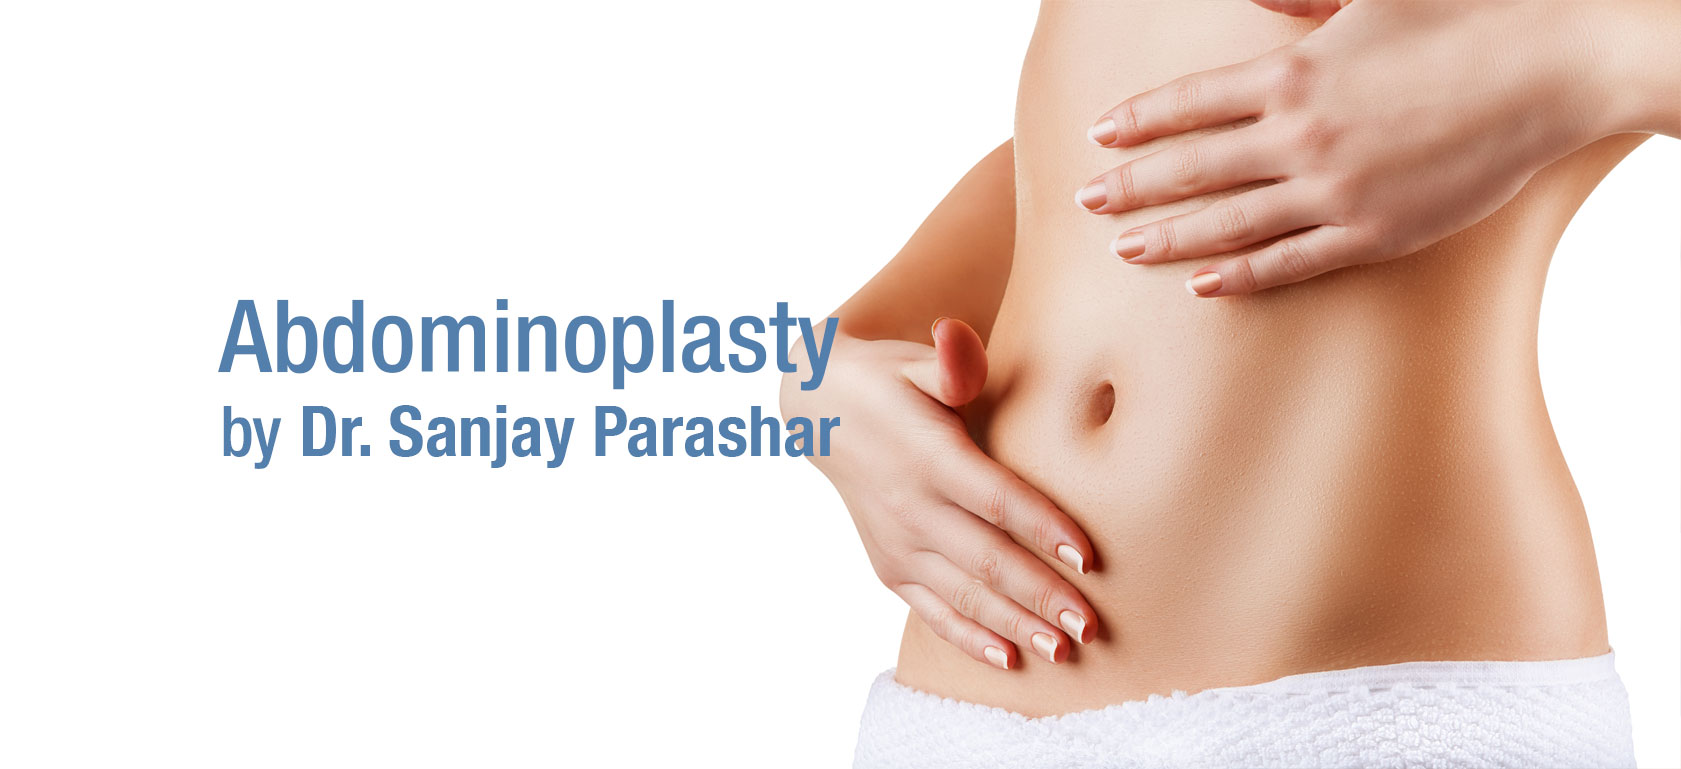 Abdominoplasty in Dubai - By Dr Sanjay Parashar